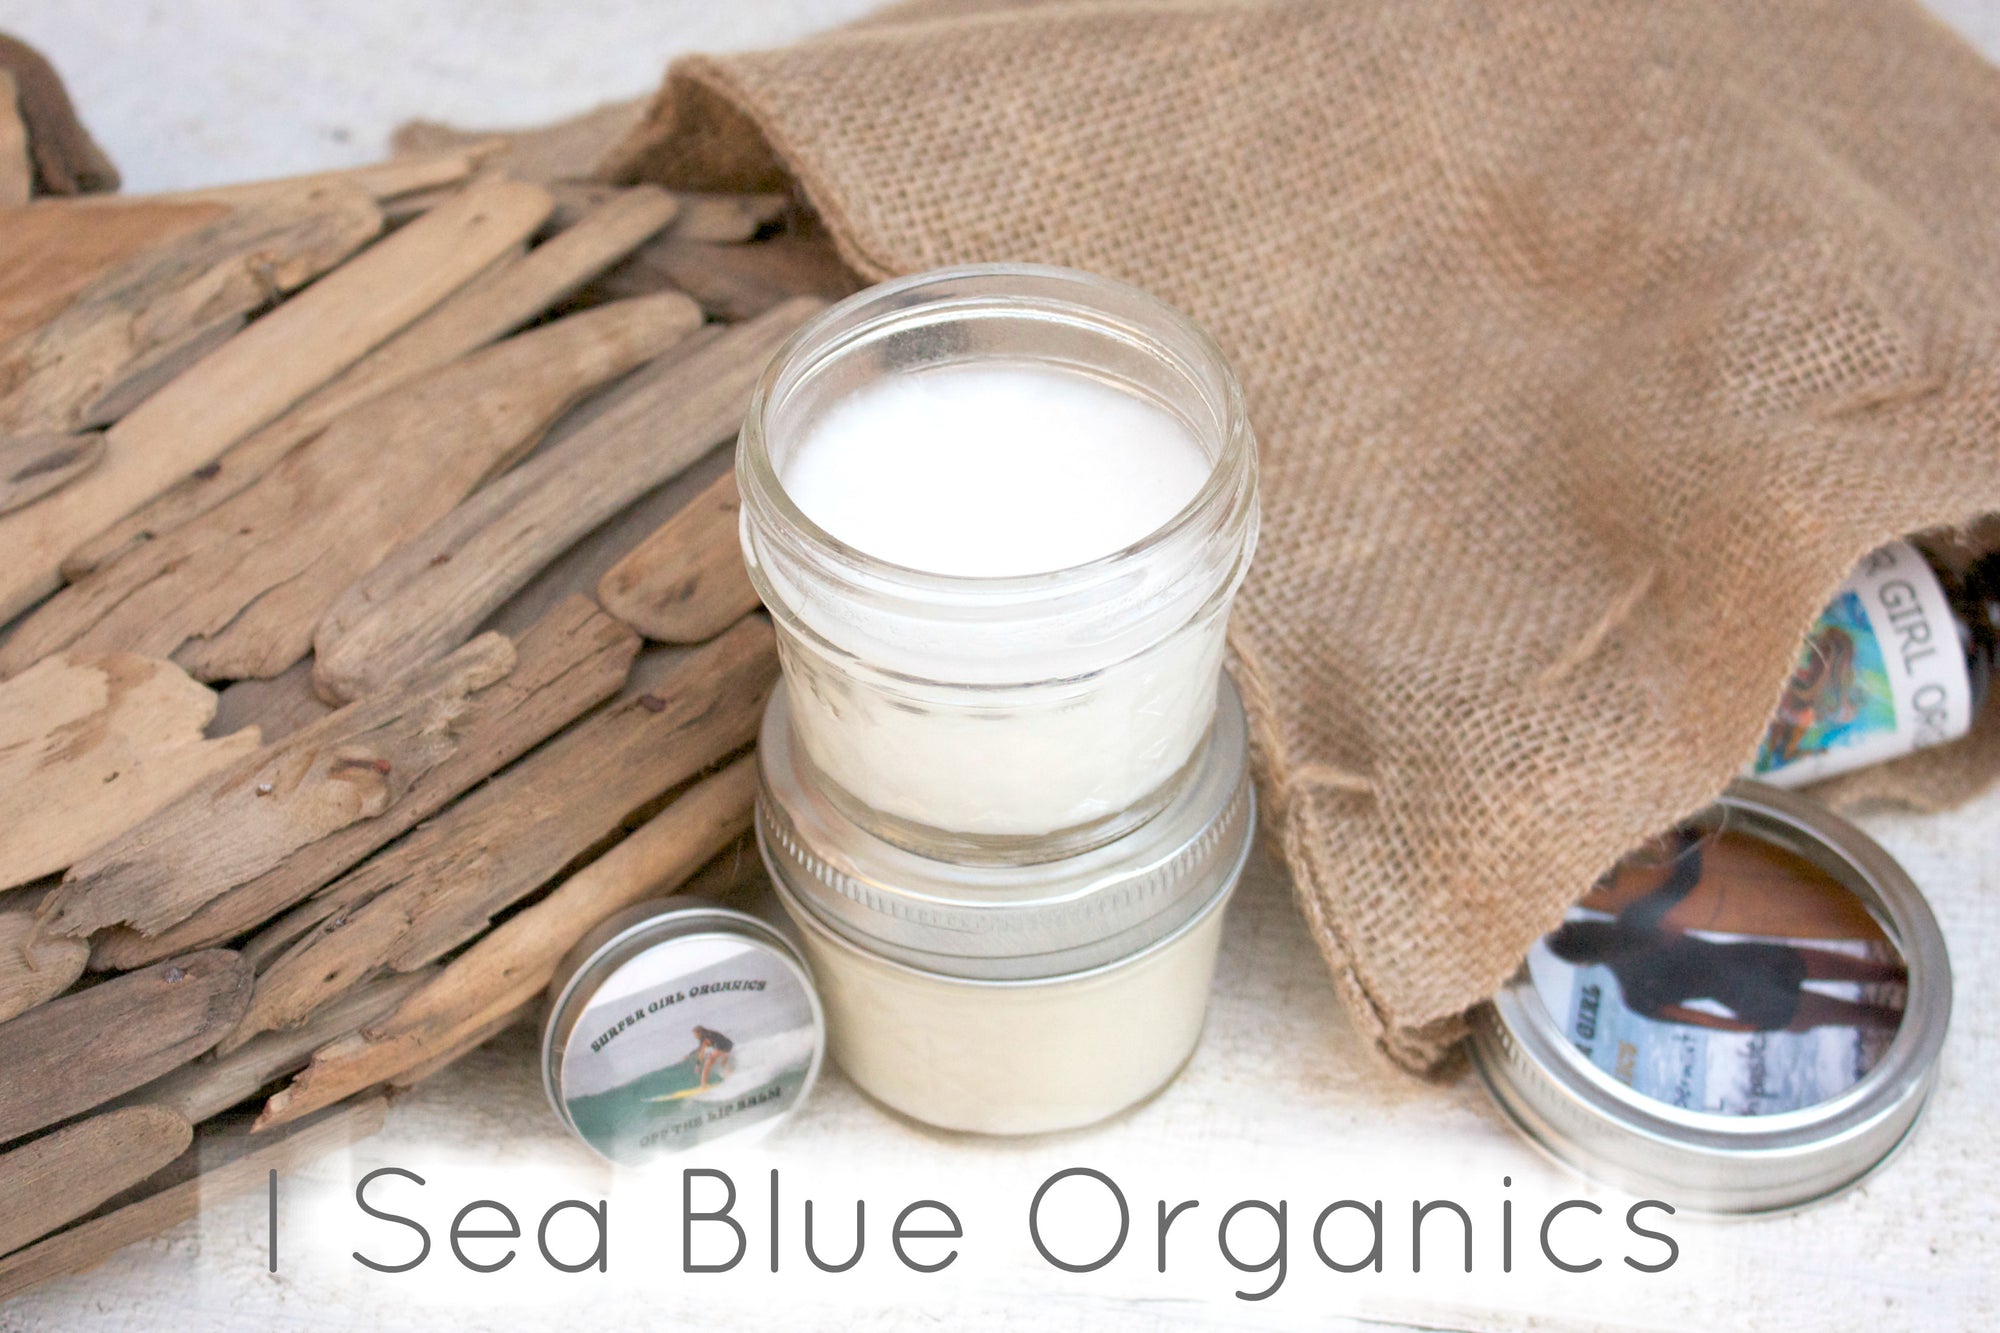 Green Your Routine: I Sea Blue Organics